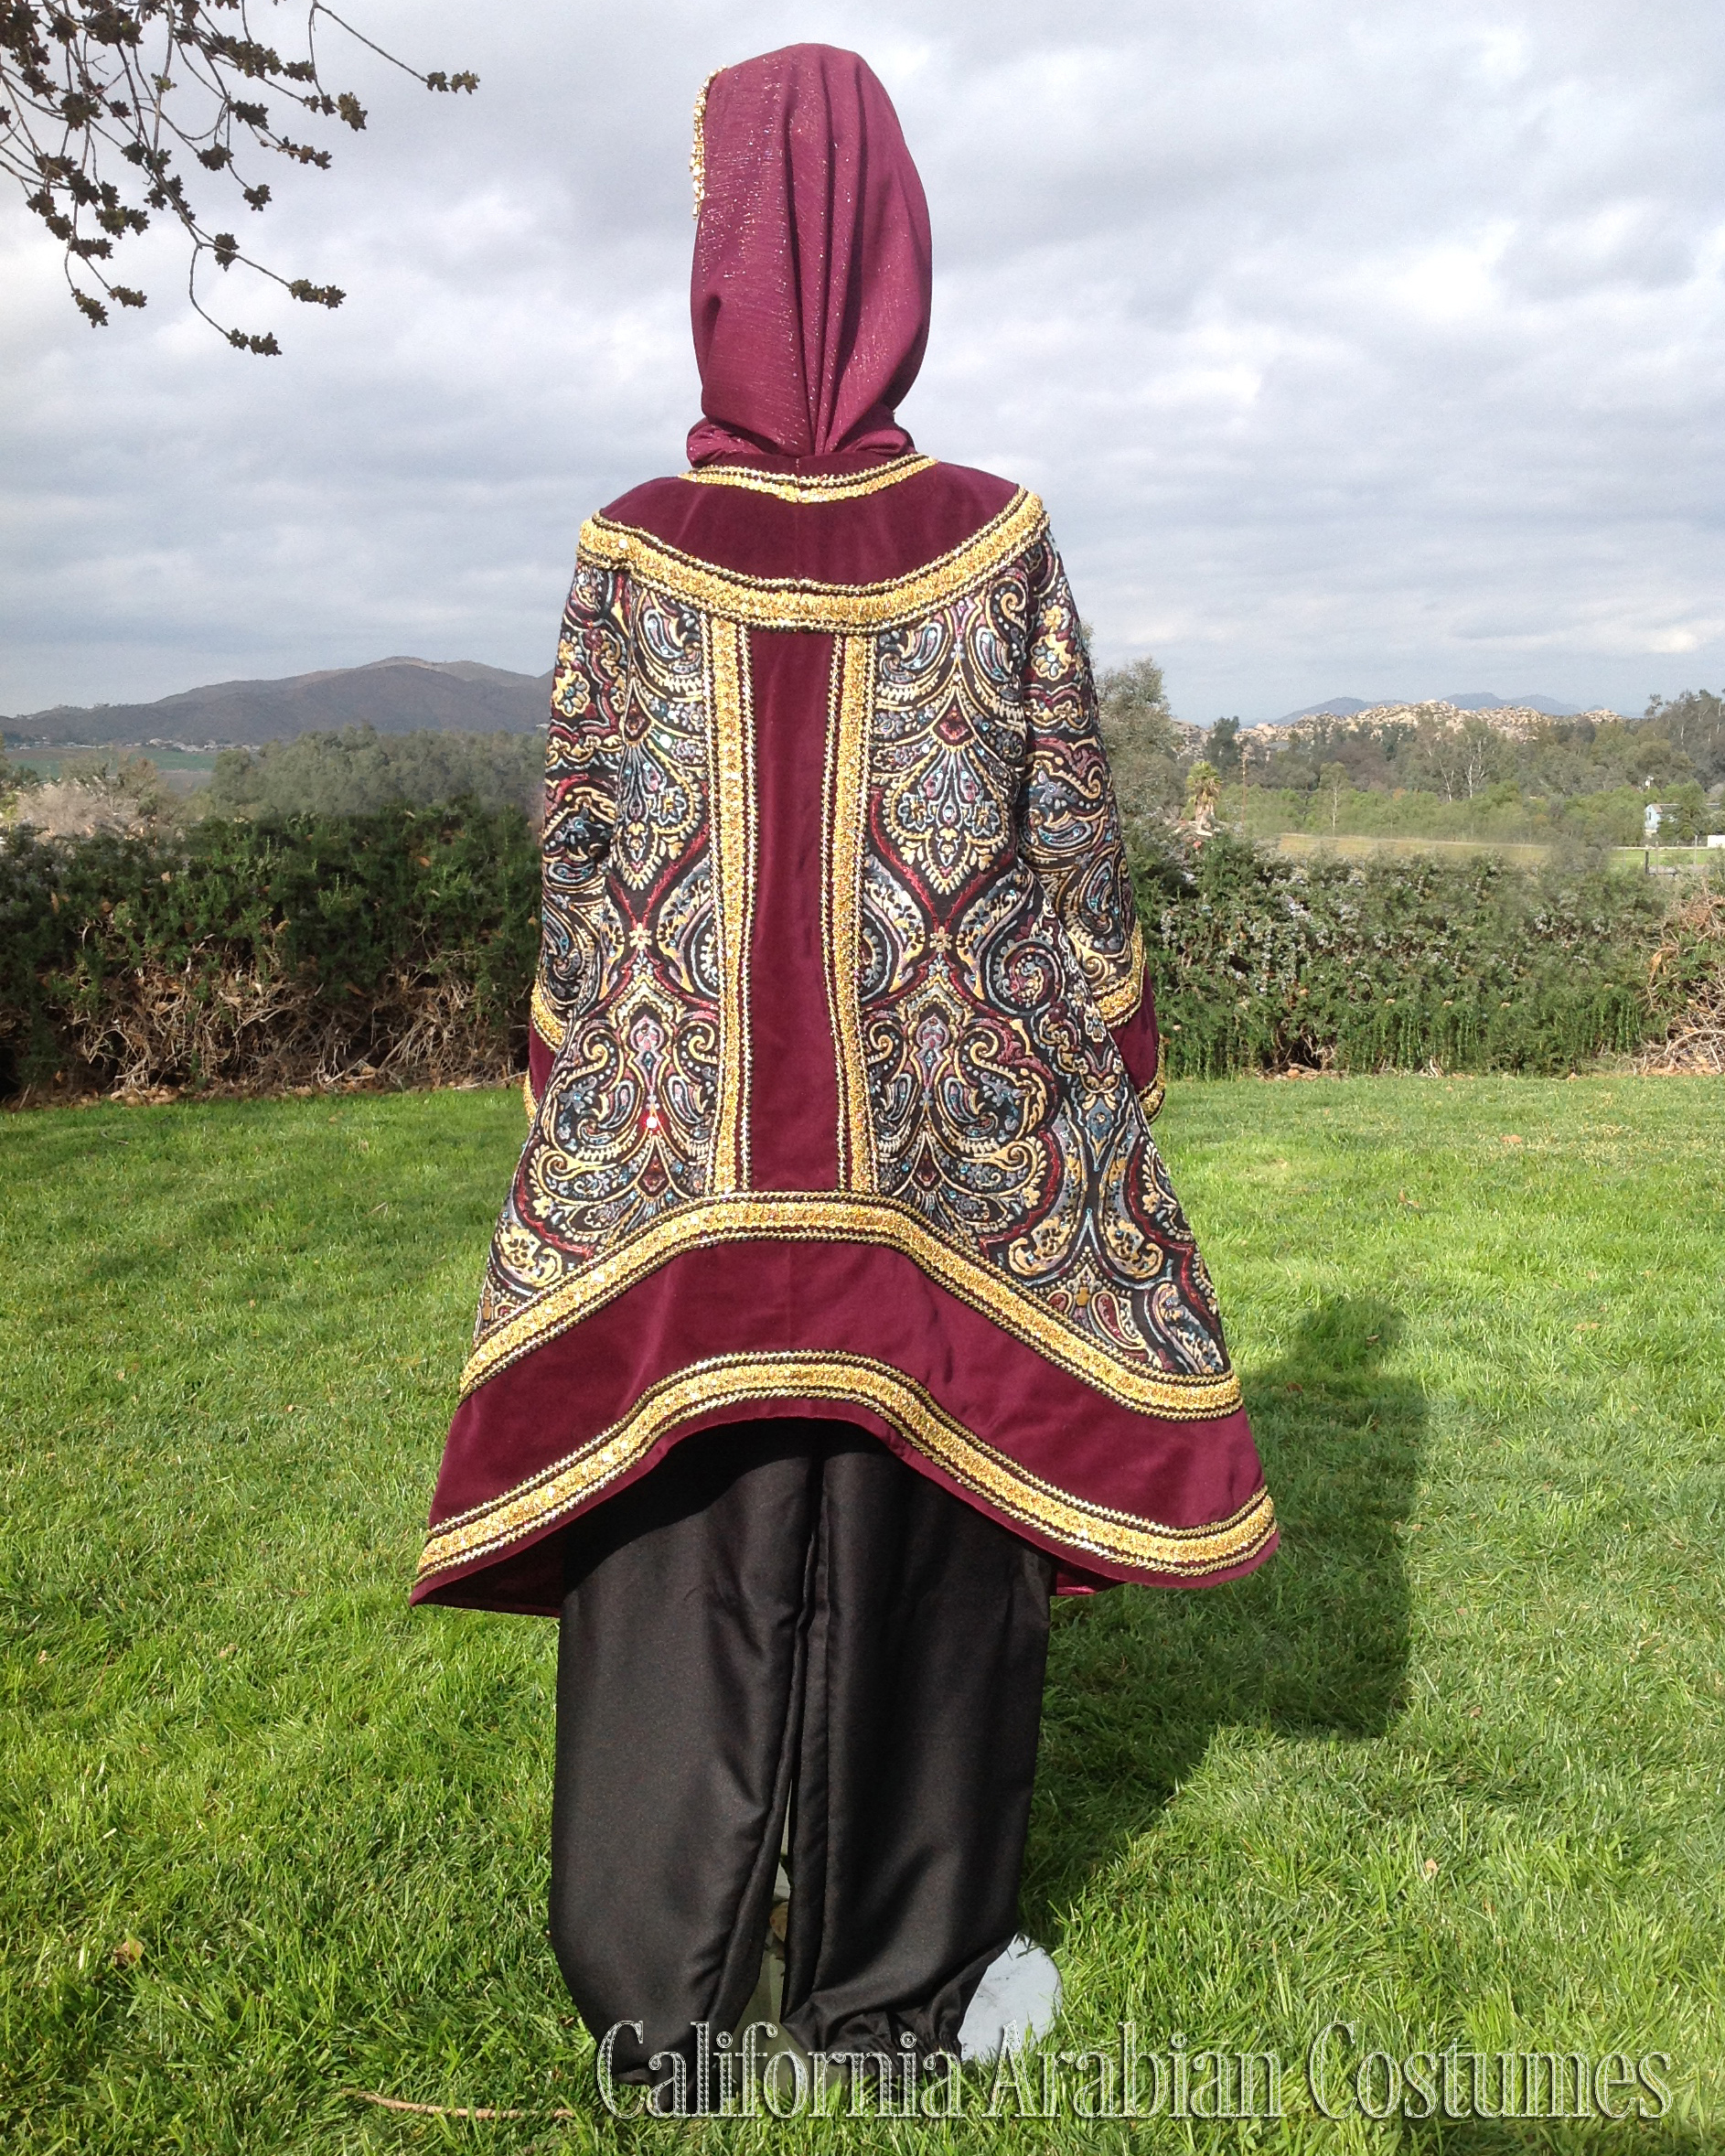 Costumes for Sale | California Arabian Costumes